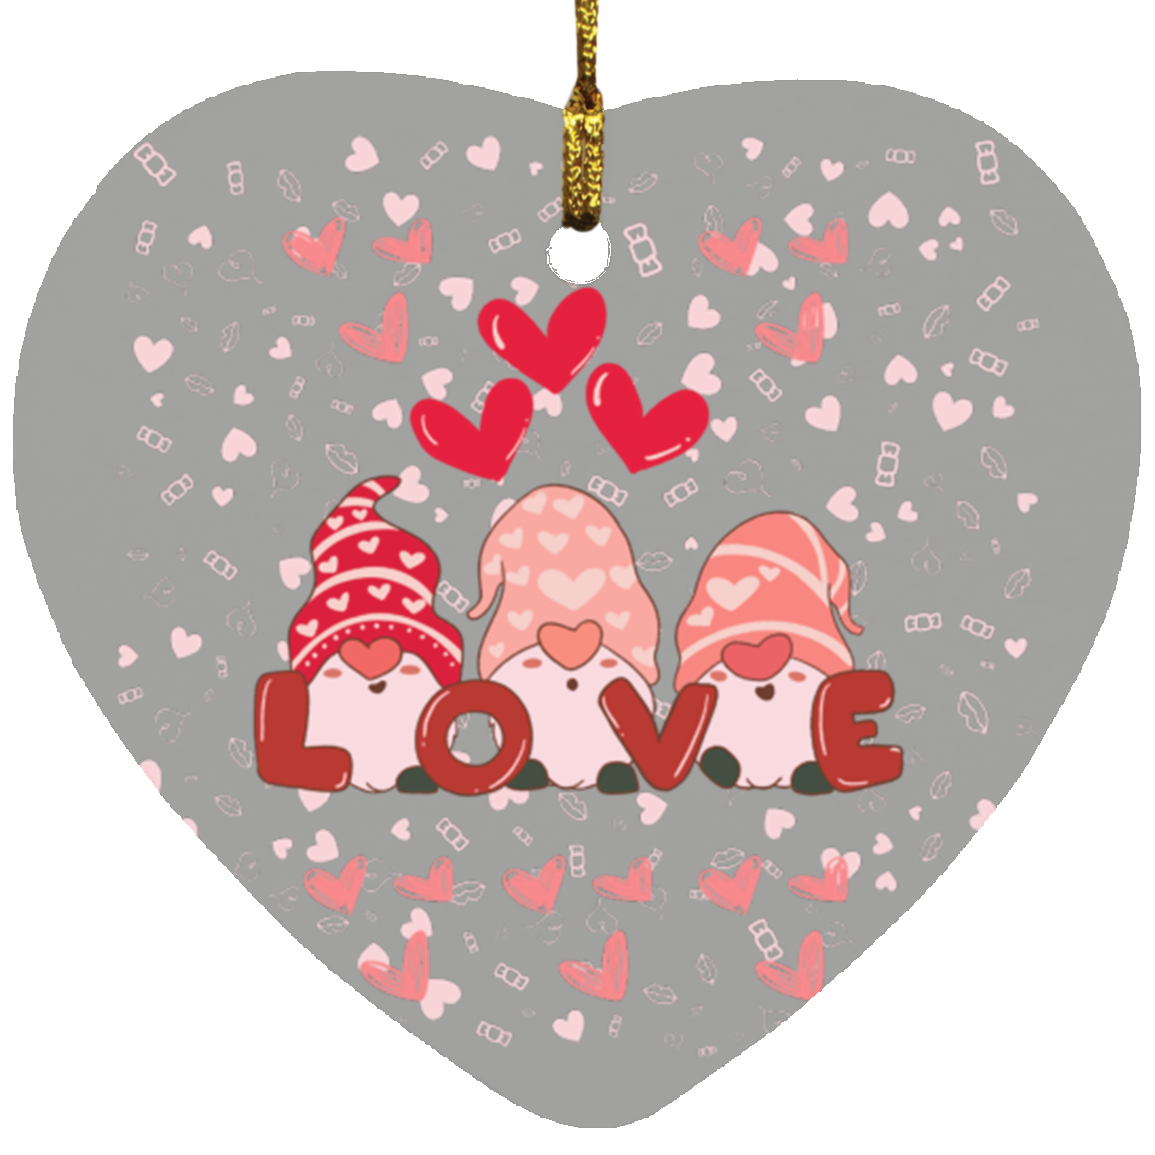 LOVE Heart Ornament